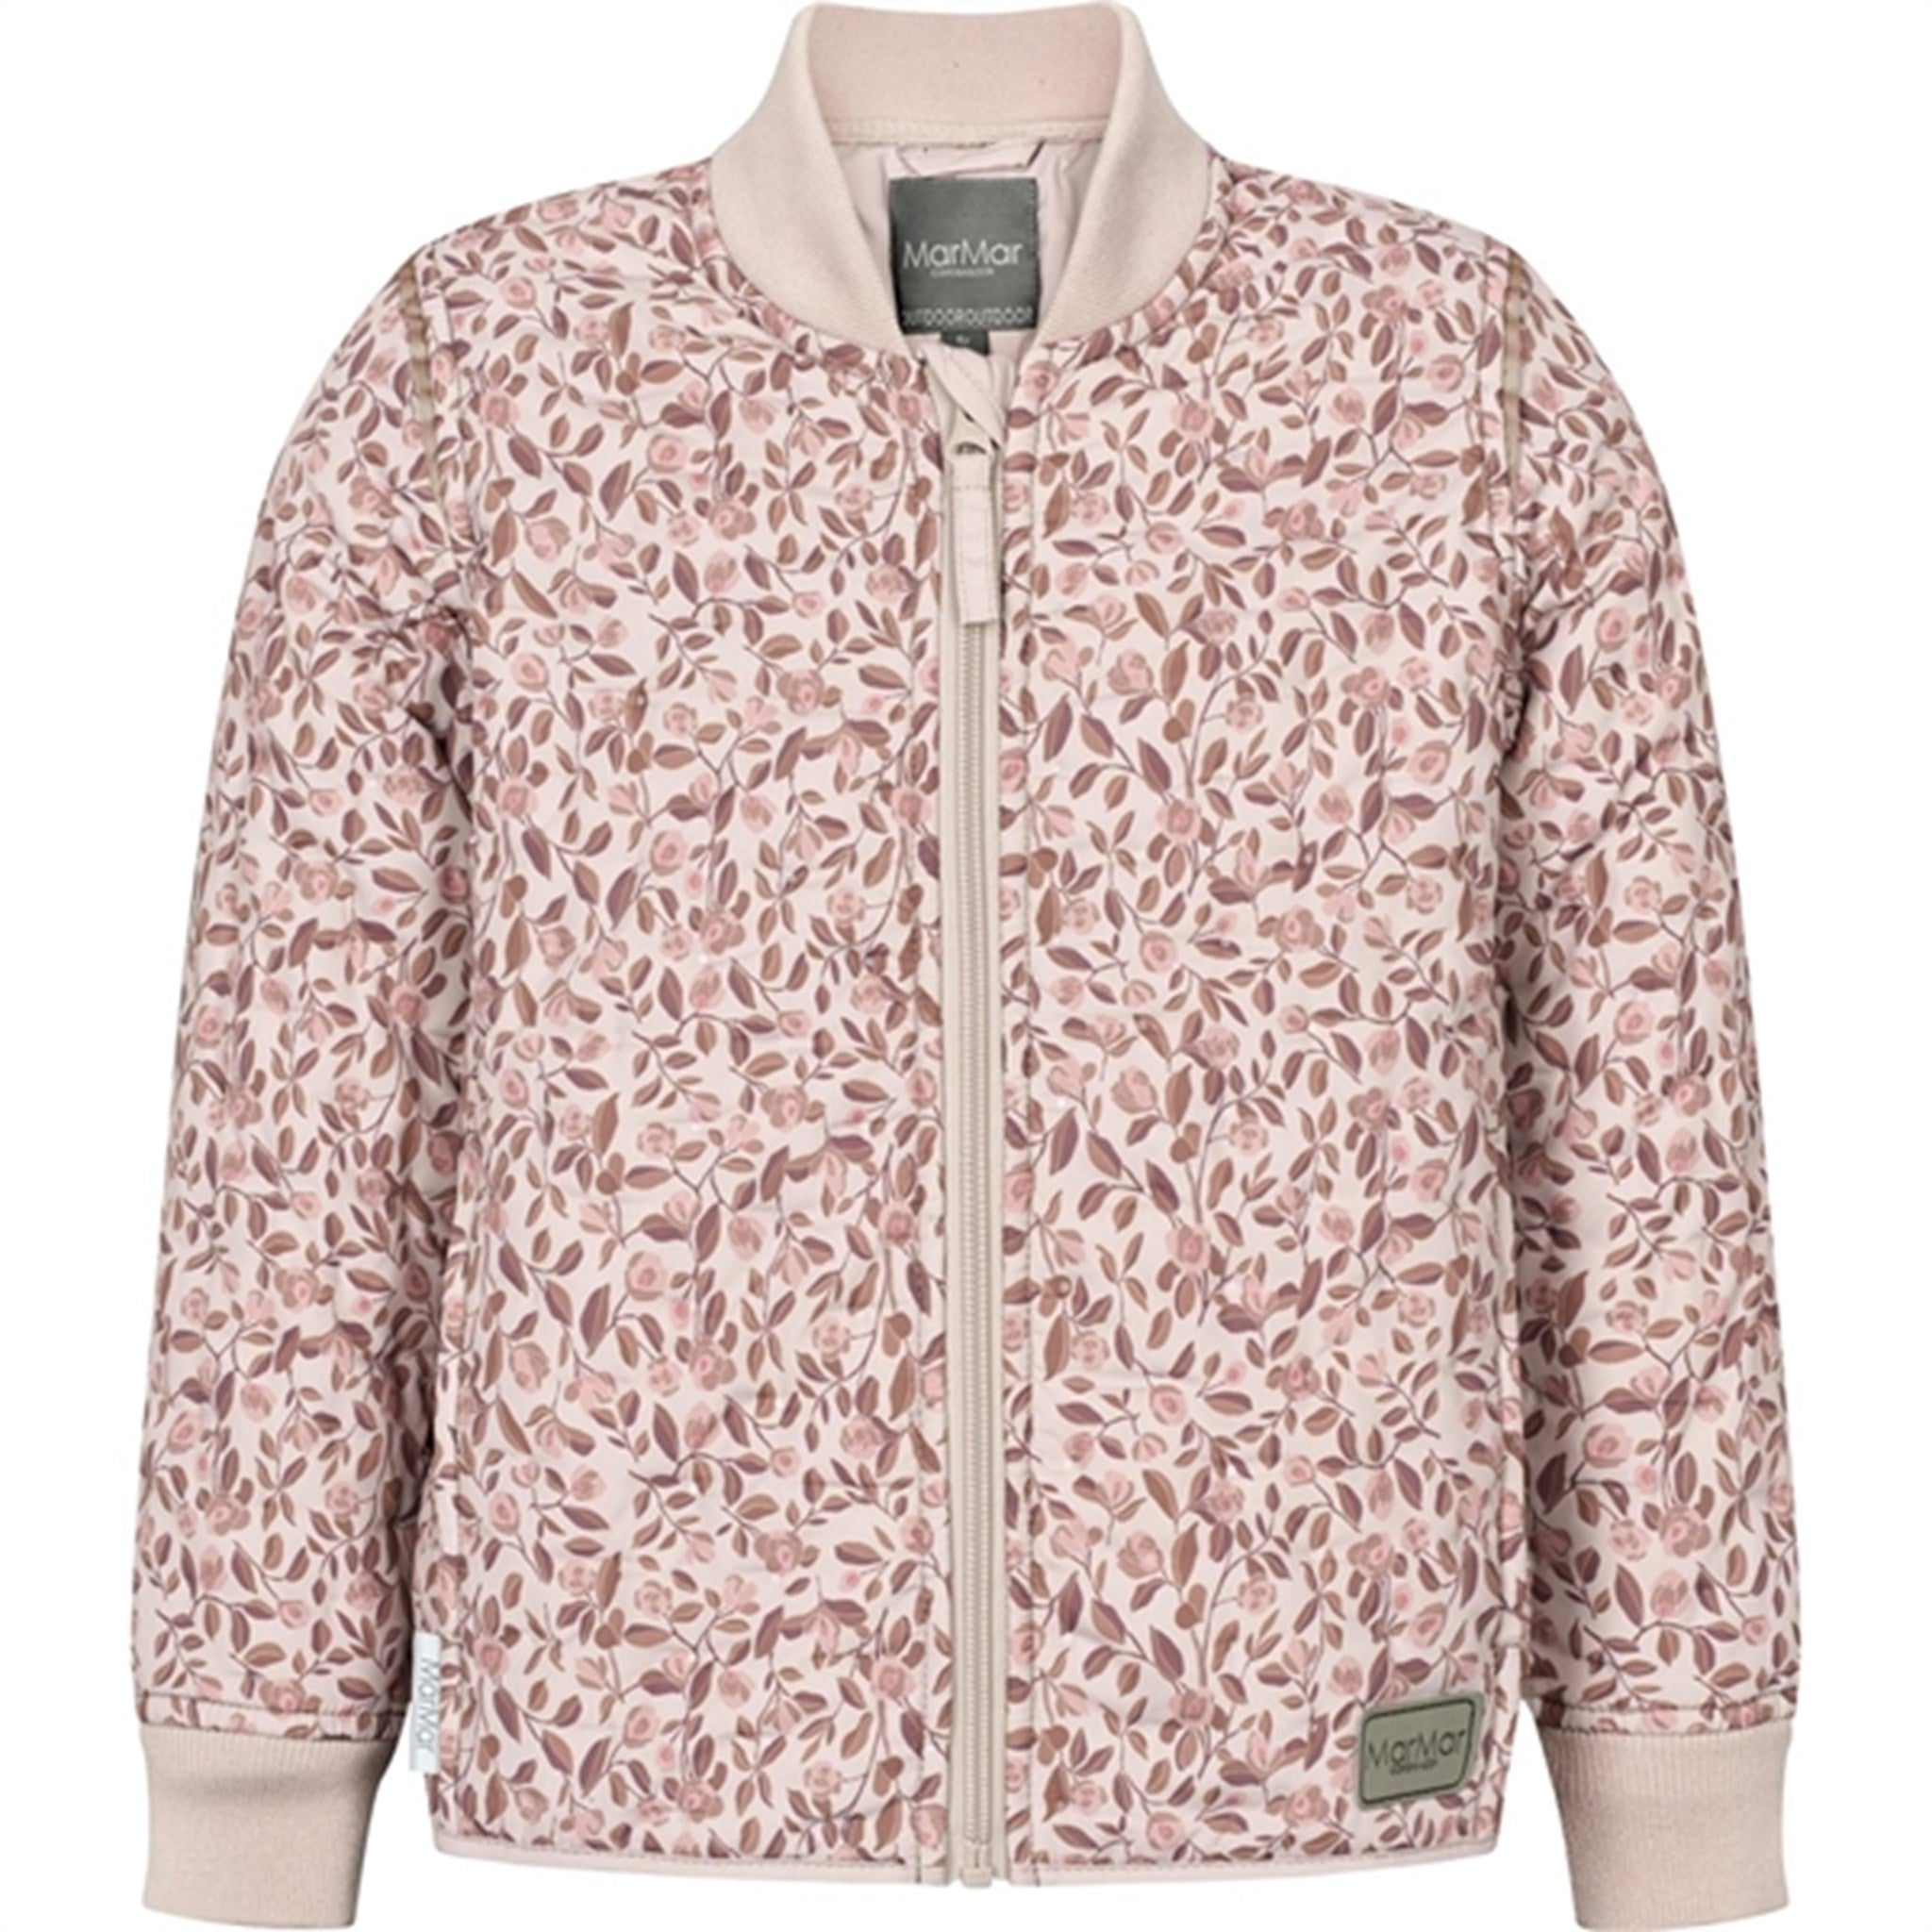 MarMar Blossom Orry Thermo Jacket